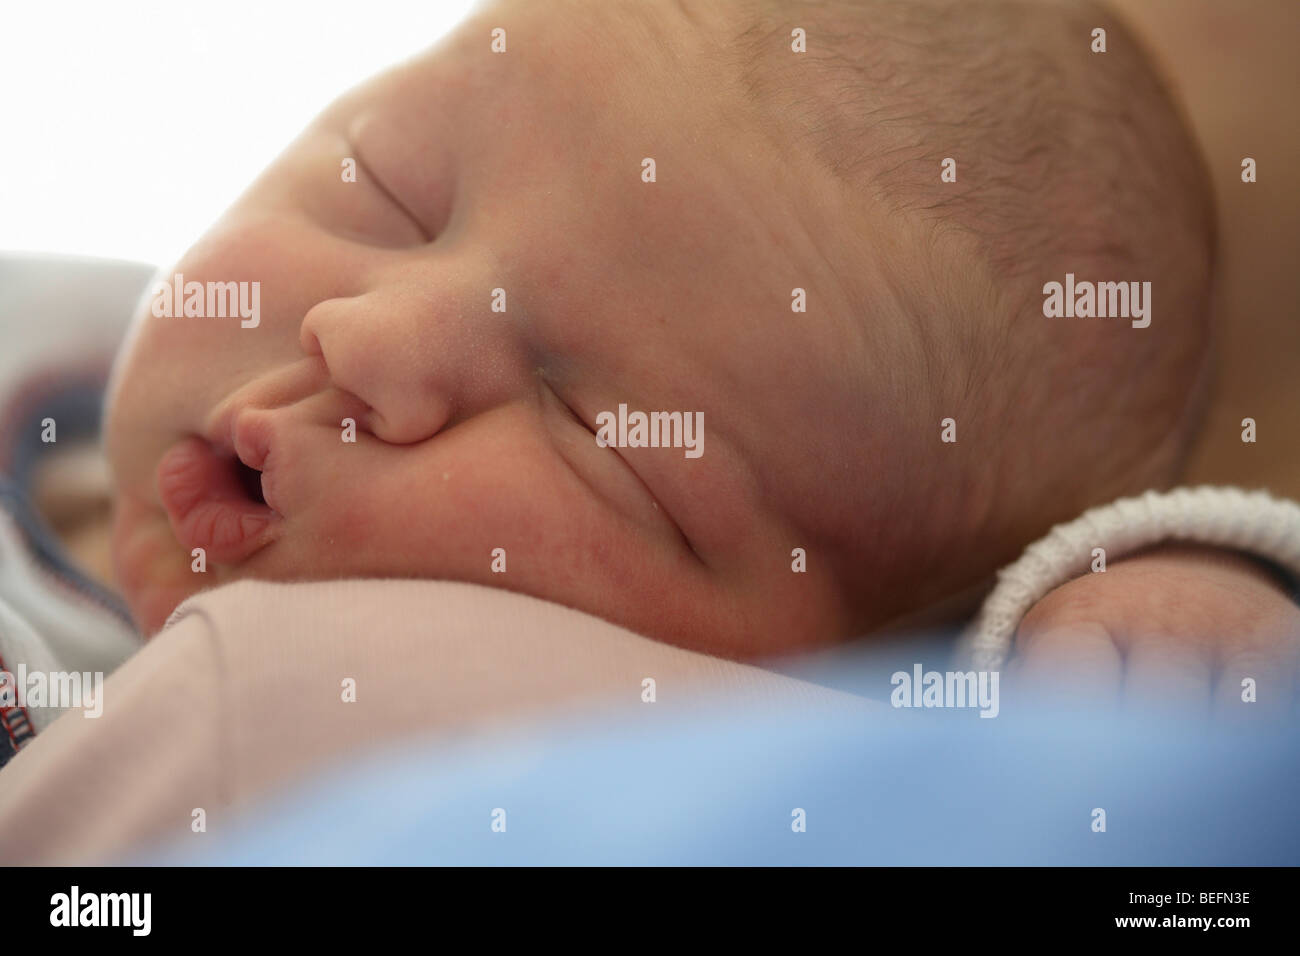 Newborn baby, 2 days old Stock Photo